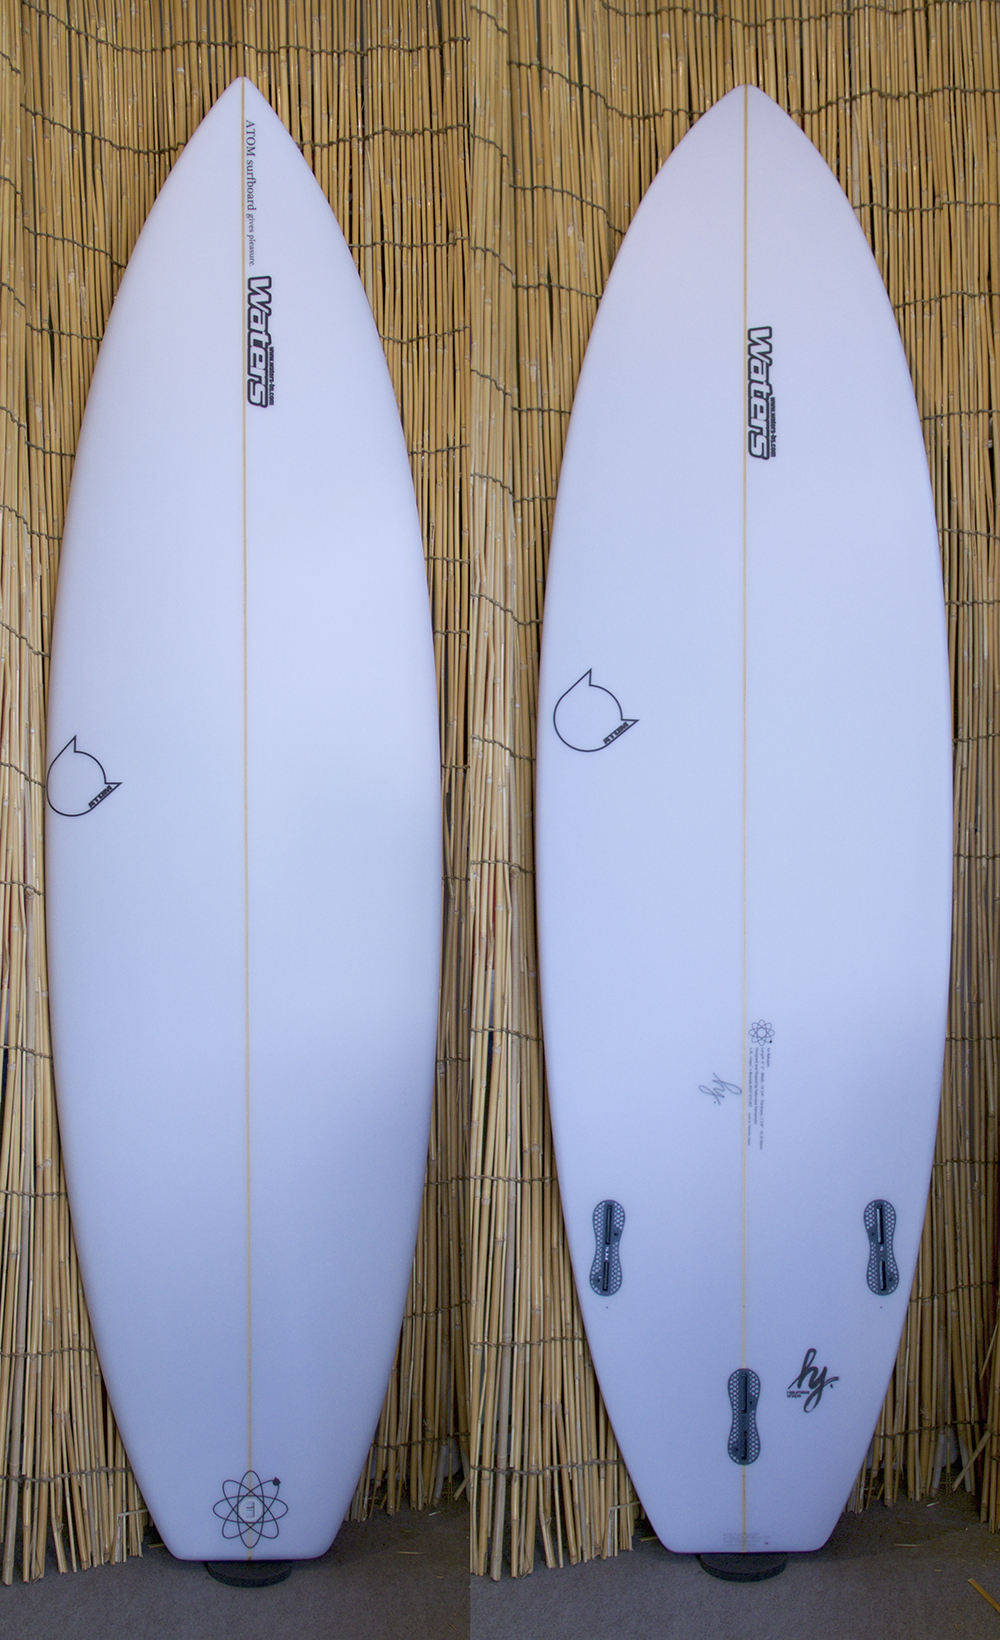 ATOM Surfboard Leaps'n Bounds model